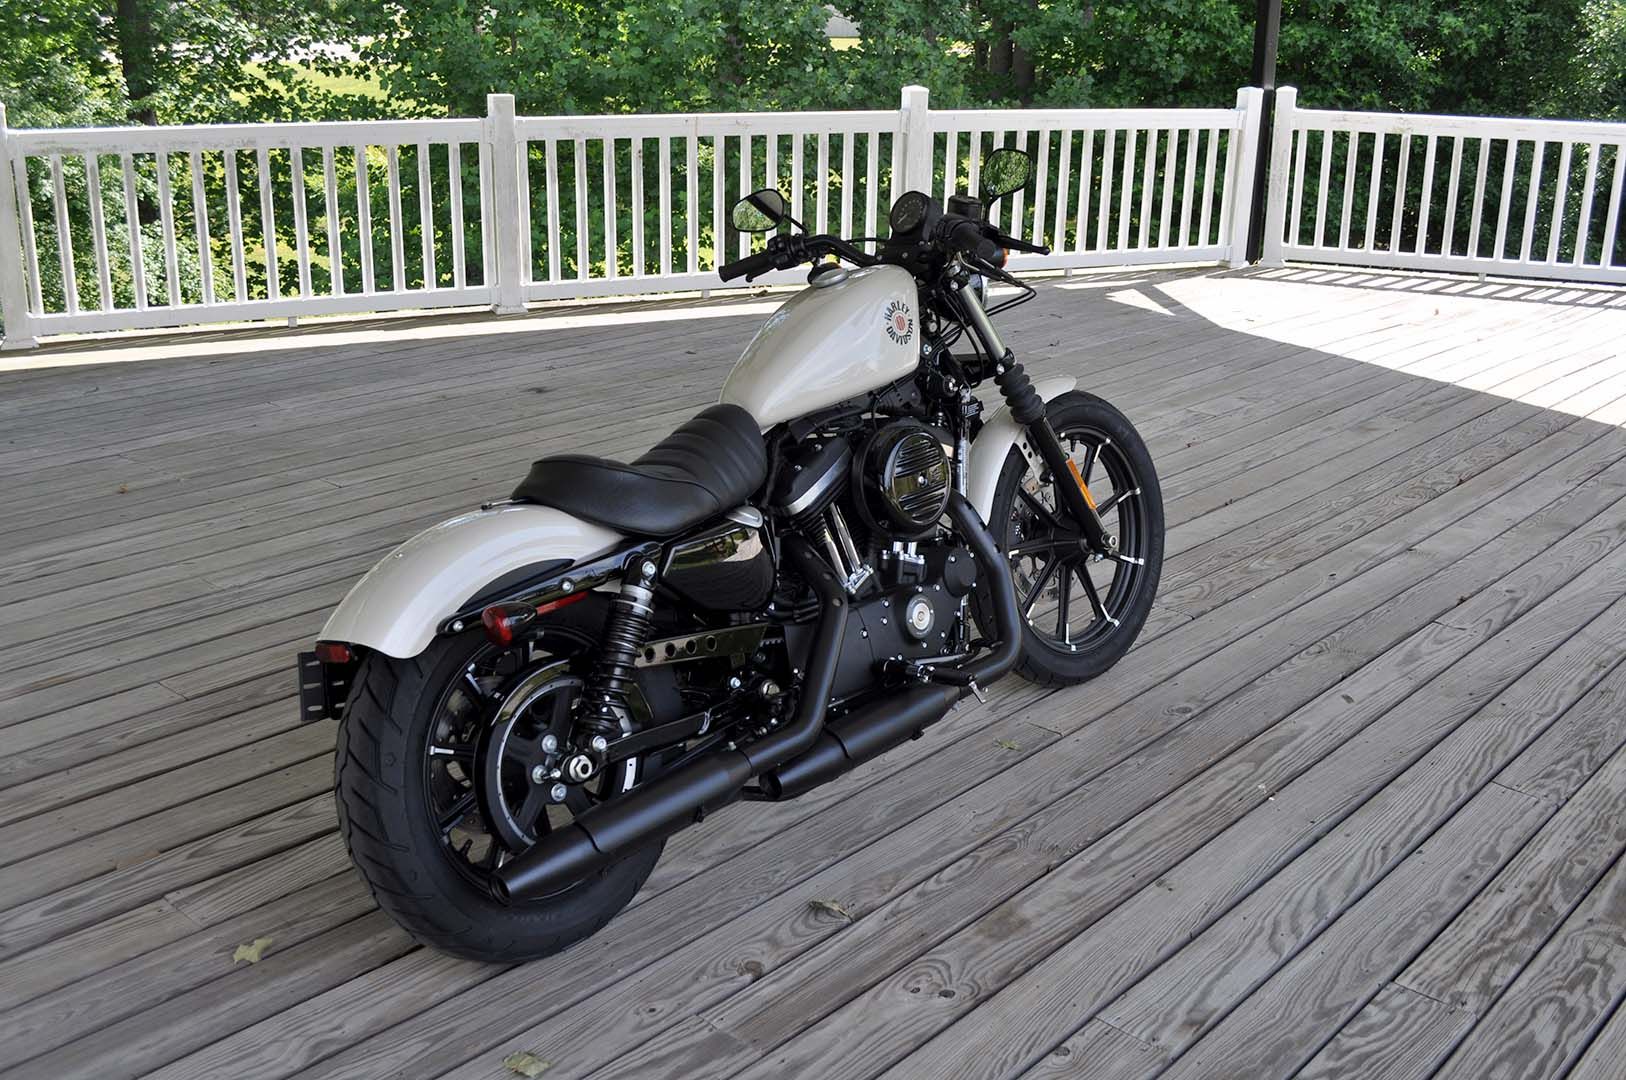 2022 Harley-Davidson Iron 883™ in Winston Salem, North Carolina - Photo 2